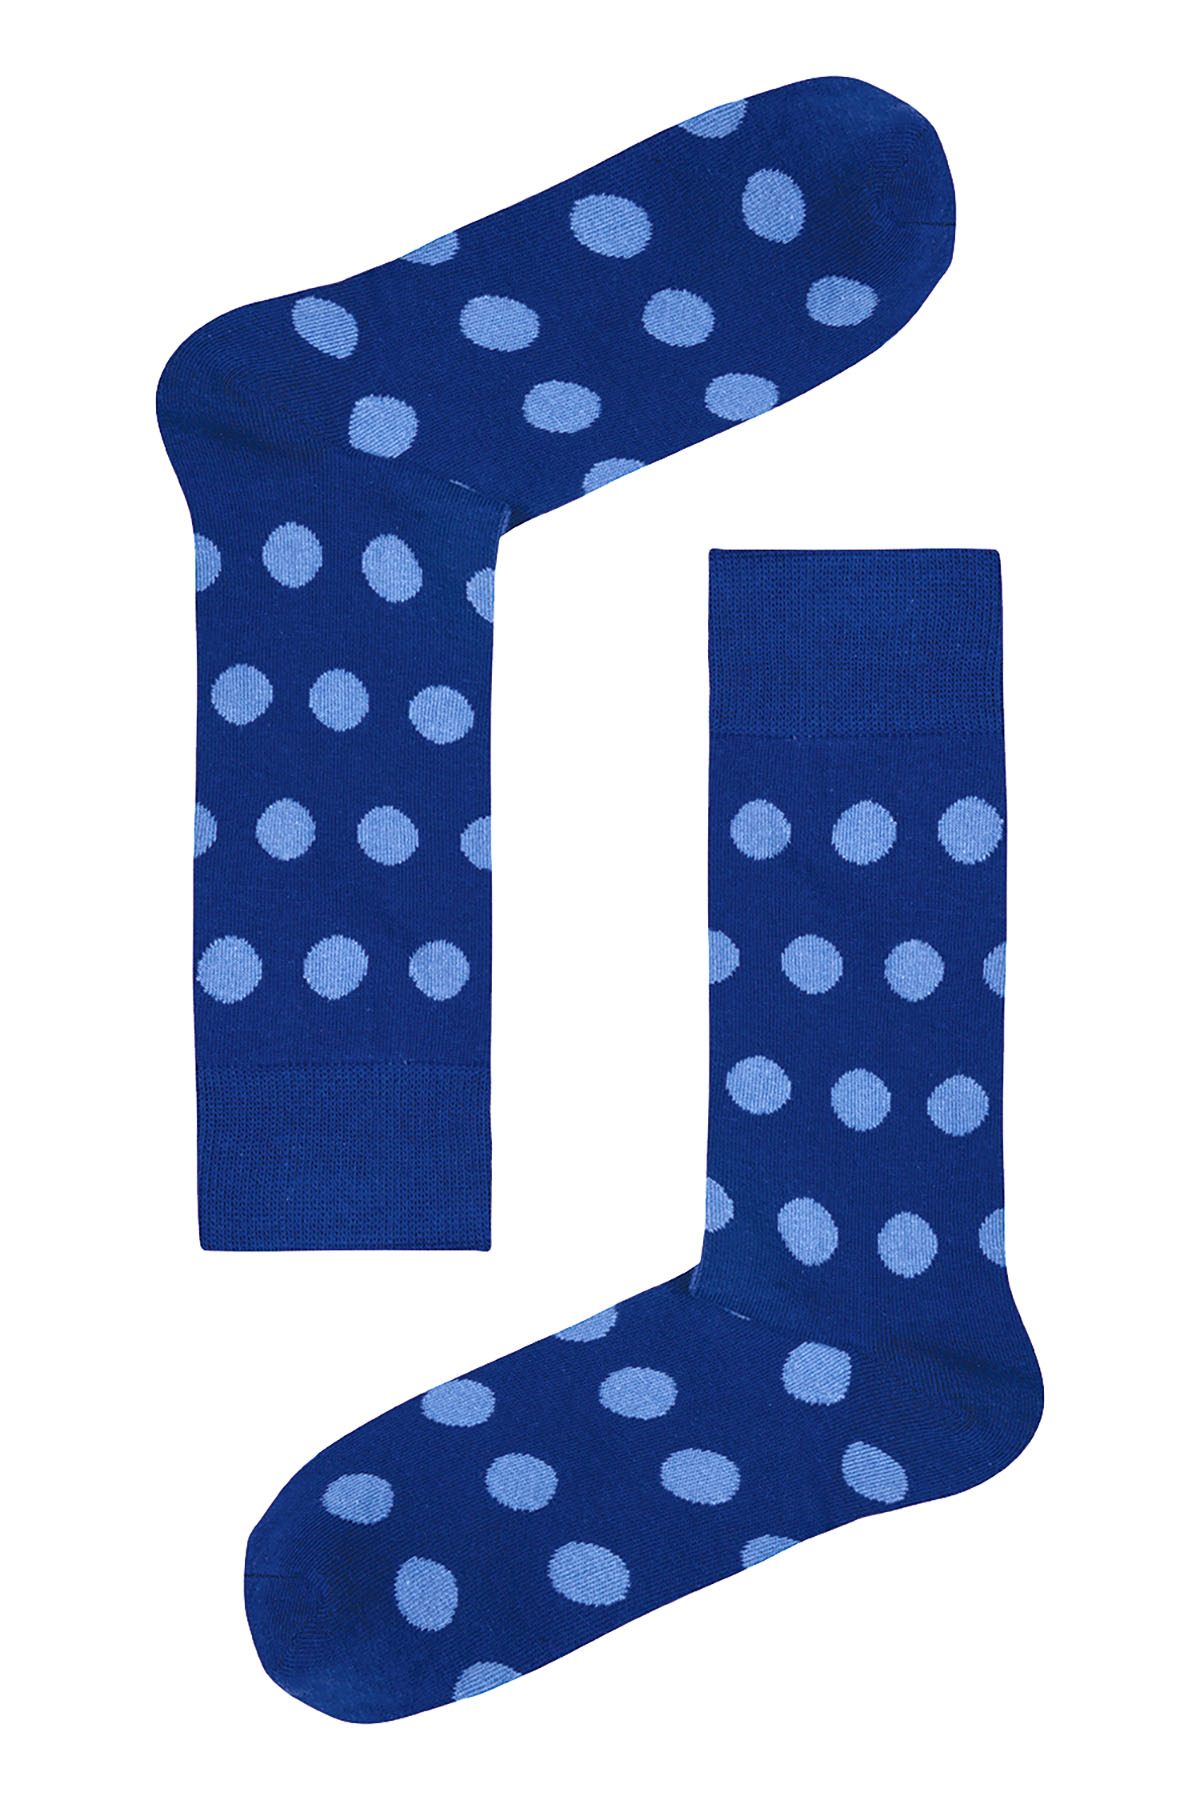 Drake & Hutch Blue/Sky Polka Unisex Crew Socks